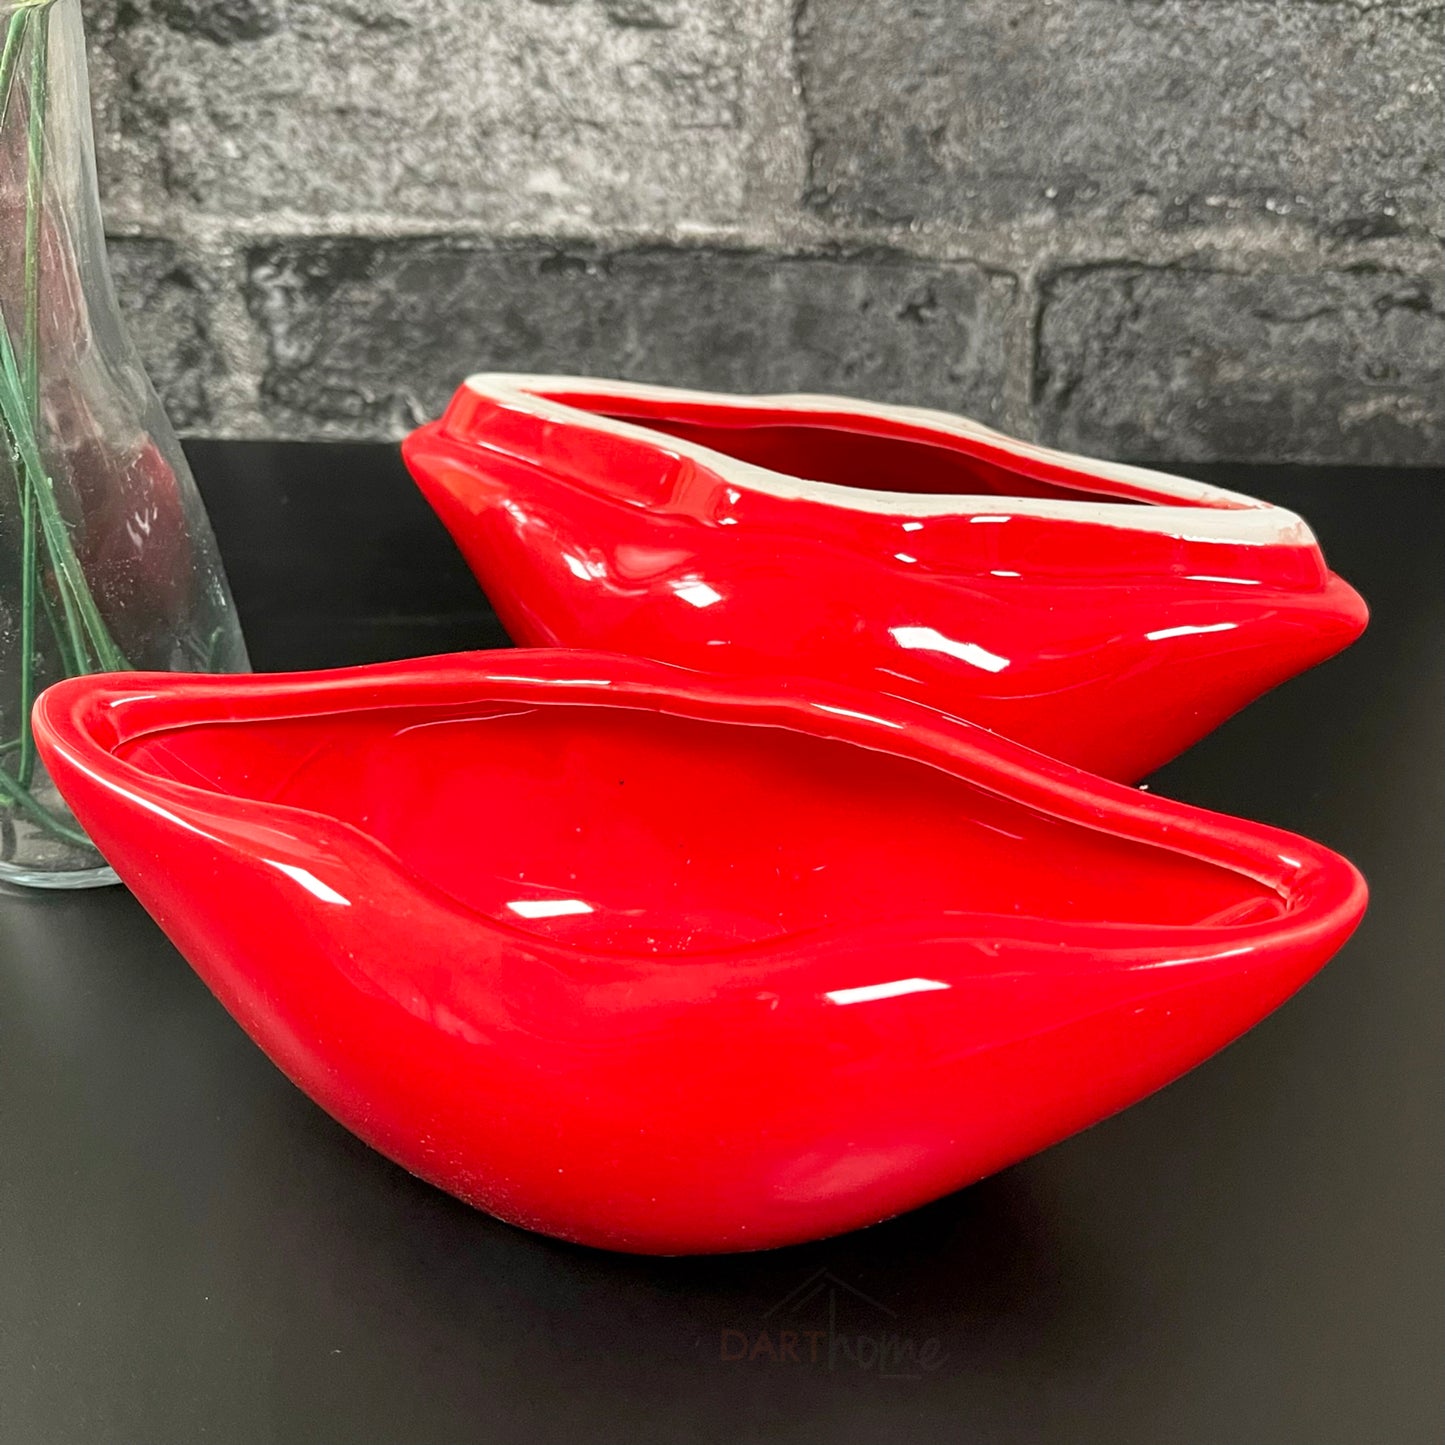 Rote Lippen-Ornament aus Keramik